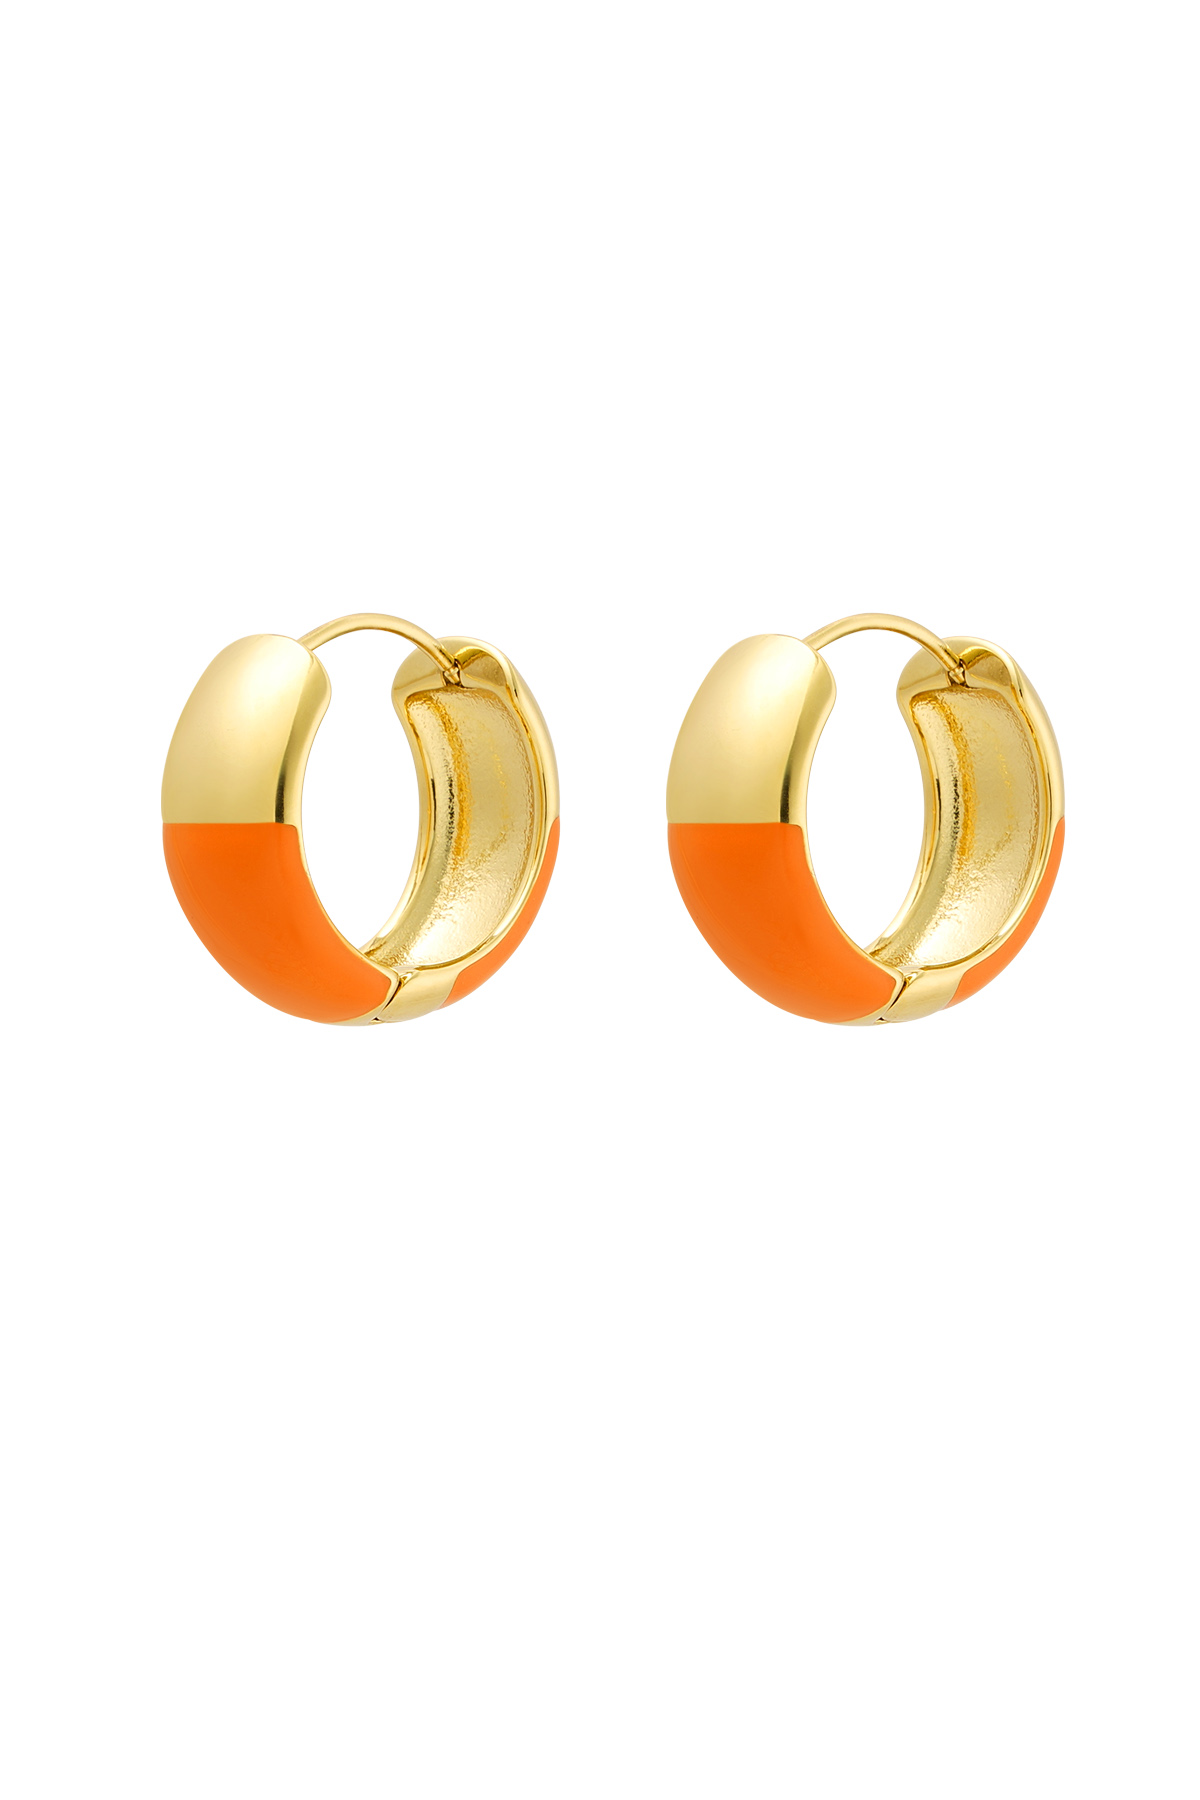 Earrings half colored - Orange & Gold Stainless Steel 